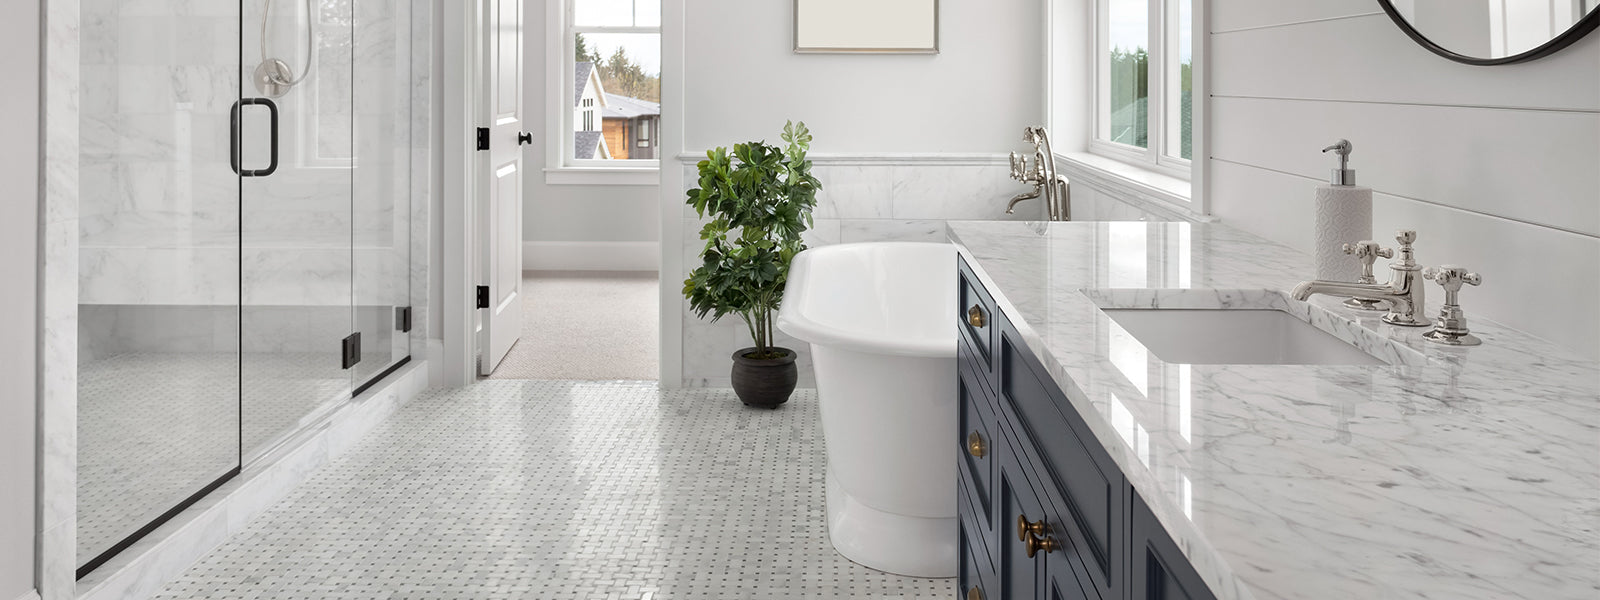 bianco carrara marble basketweave mosaic tile bathroom floor